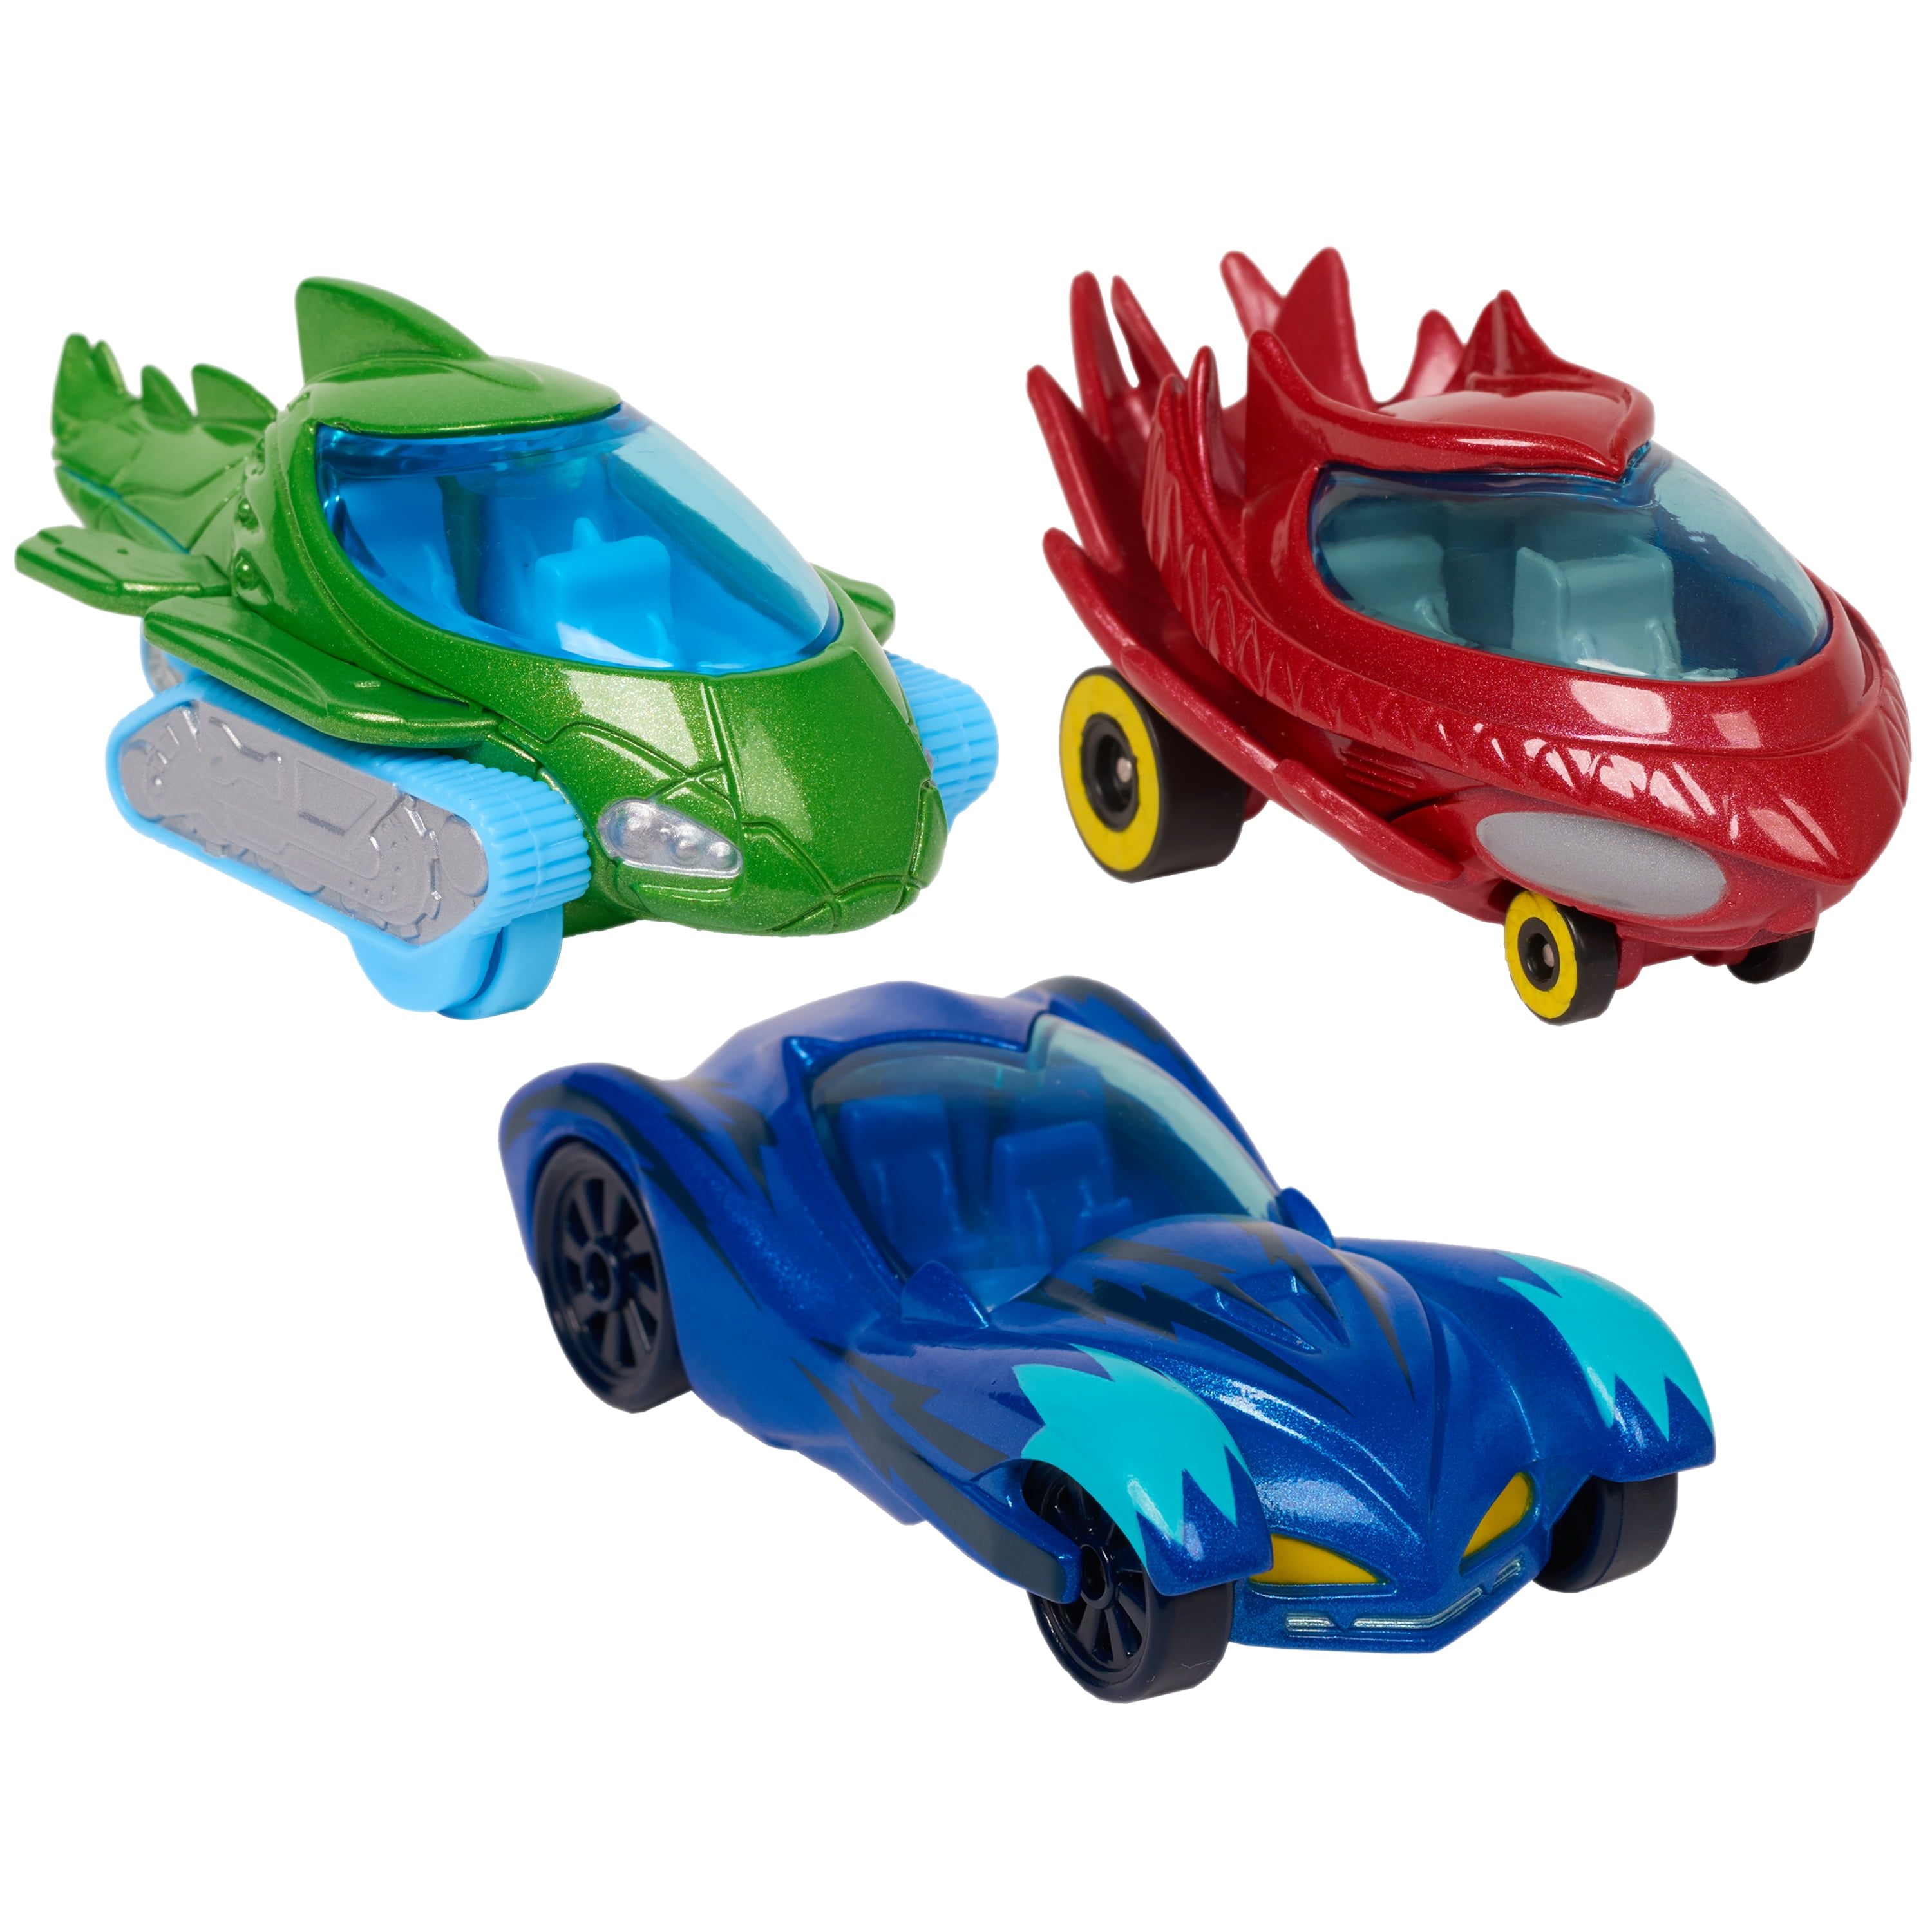 PJ Masques 3 x die cast Vehicles Gekko catboy & ROMEO voiture Set Jouets NEUF 